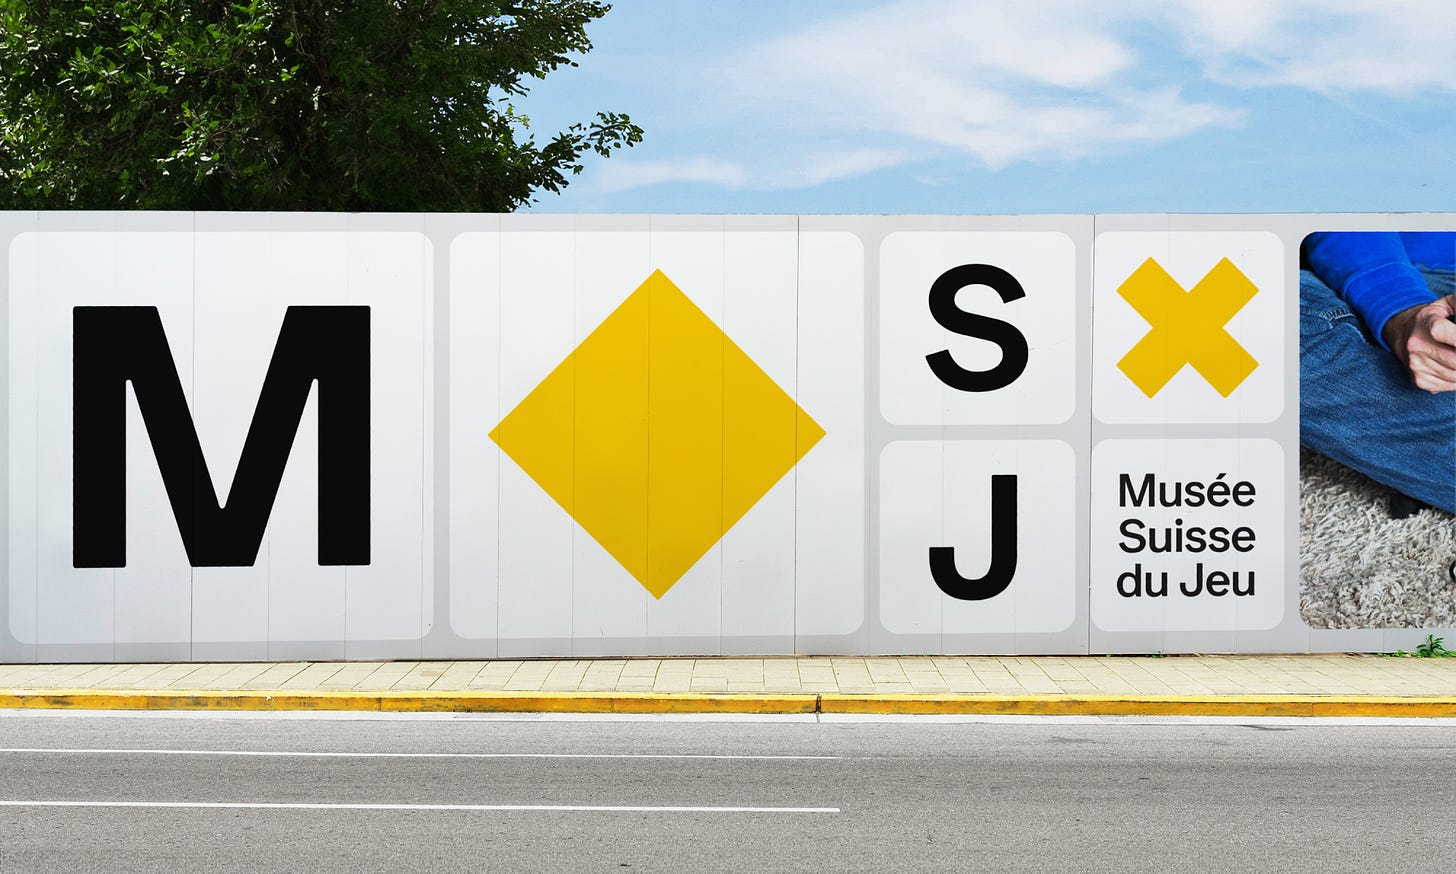 Mural design for Musée Suisse du Jeu with large letters "M", "S", "J", a yellow diamond, a yellow "X", and the text "Musée Suisse du Jeu".